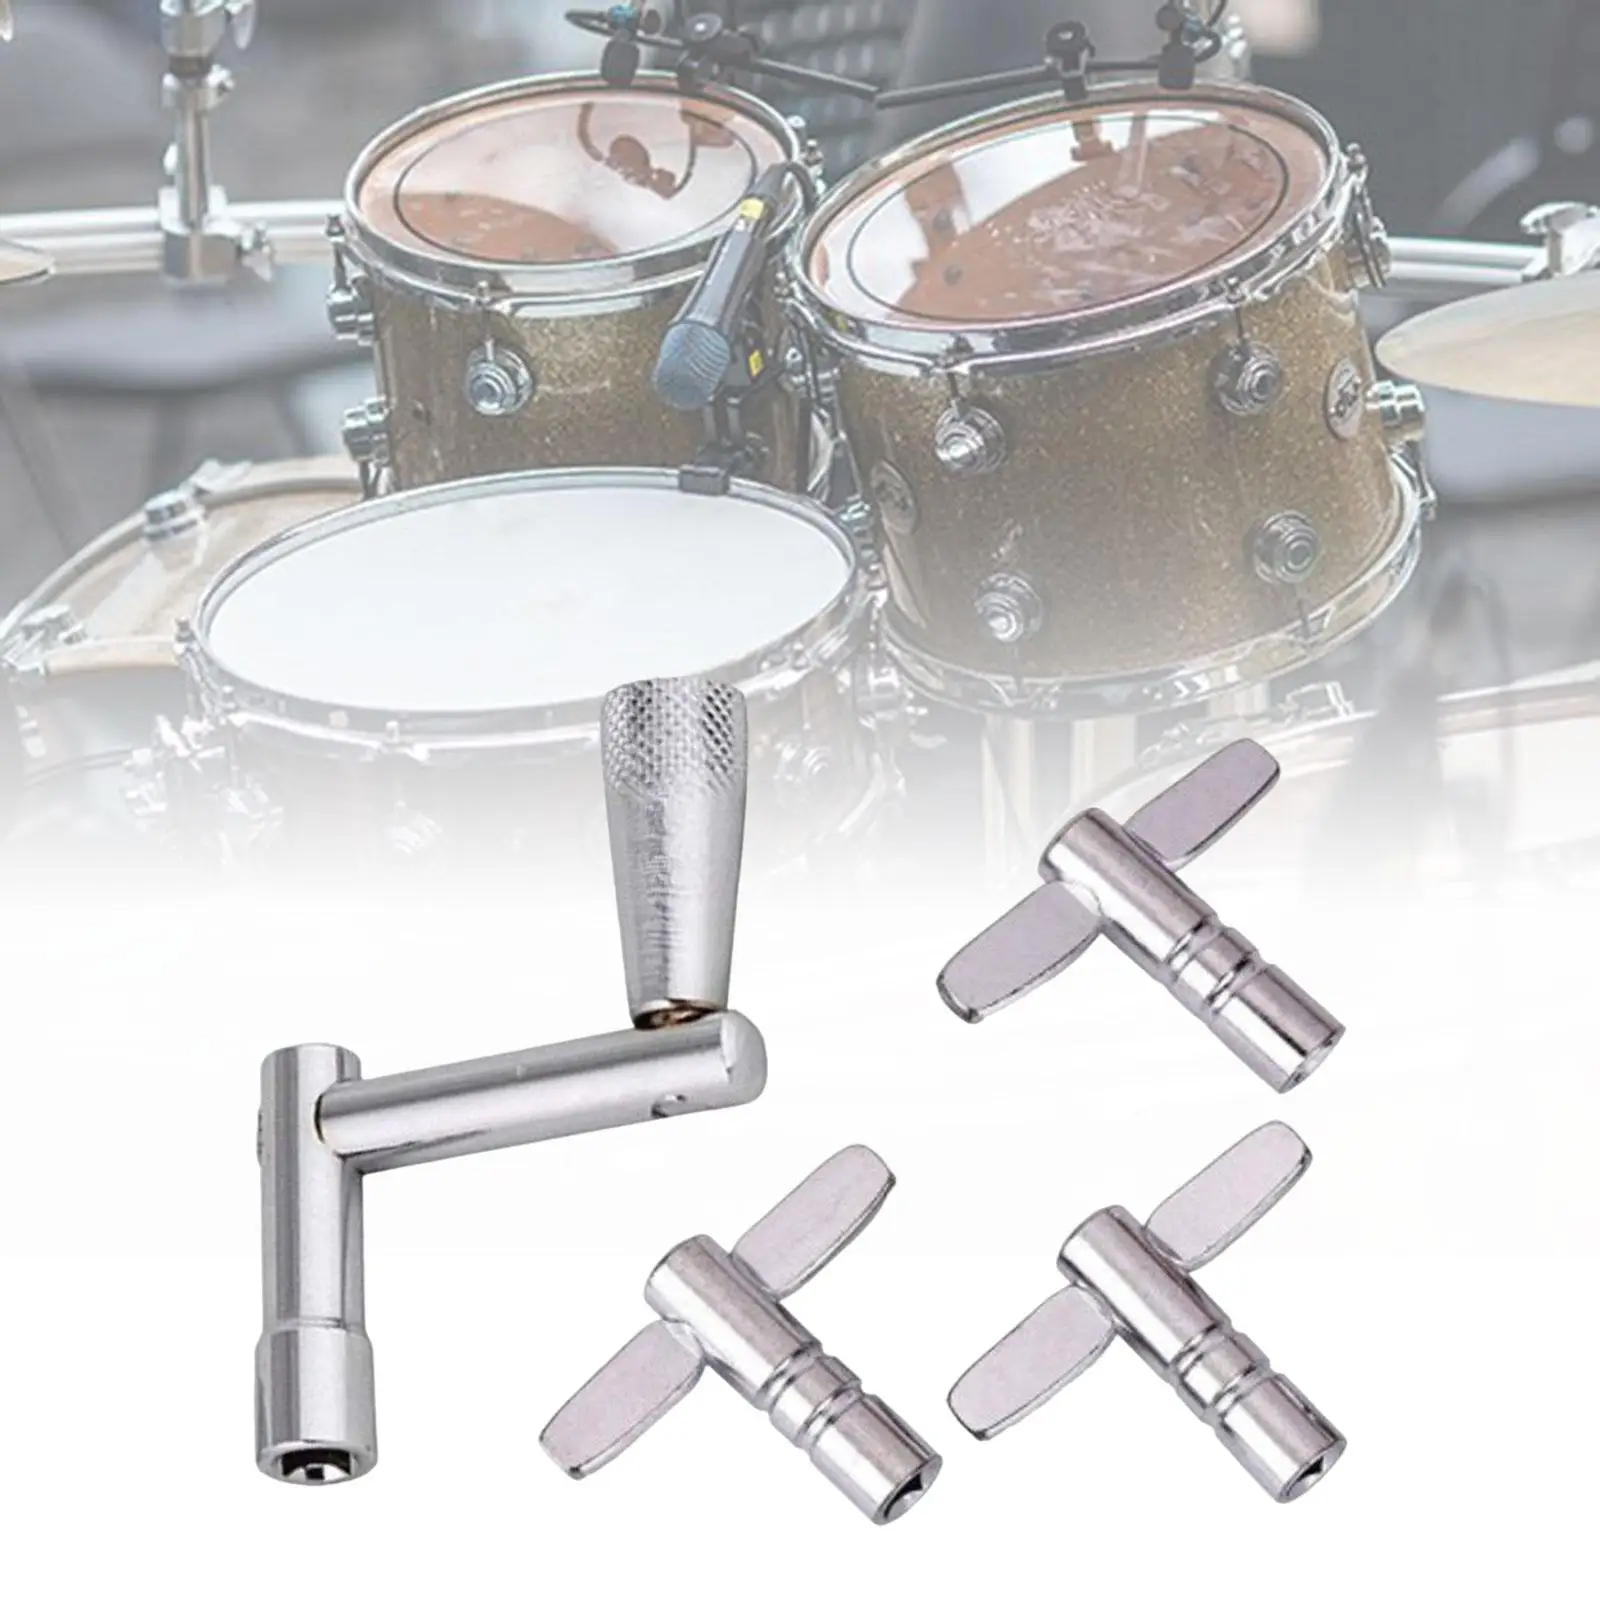 Drum Key T Handle Ergonomic Accessories Drum Key Jazz Drum Rack Drum Adjusting Wrench Drum Adjusting Tool for Drum Tension Rods